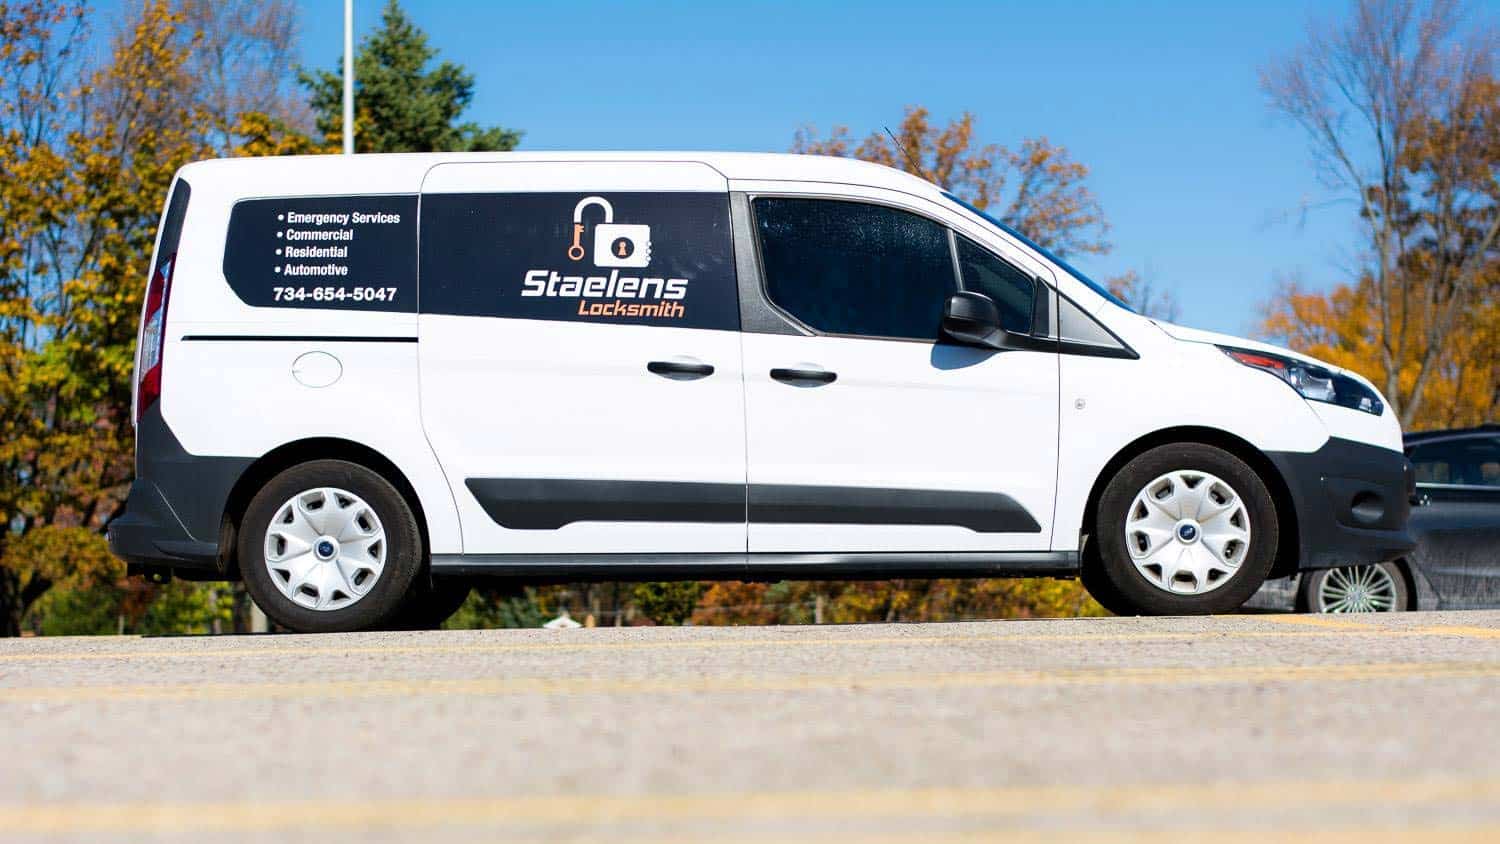 Staelens locksmith van with emergency intervention near Ann Arbor.